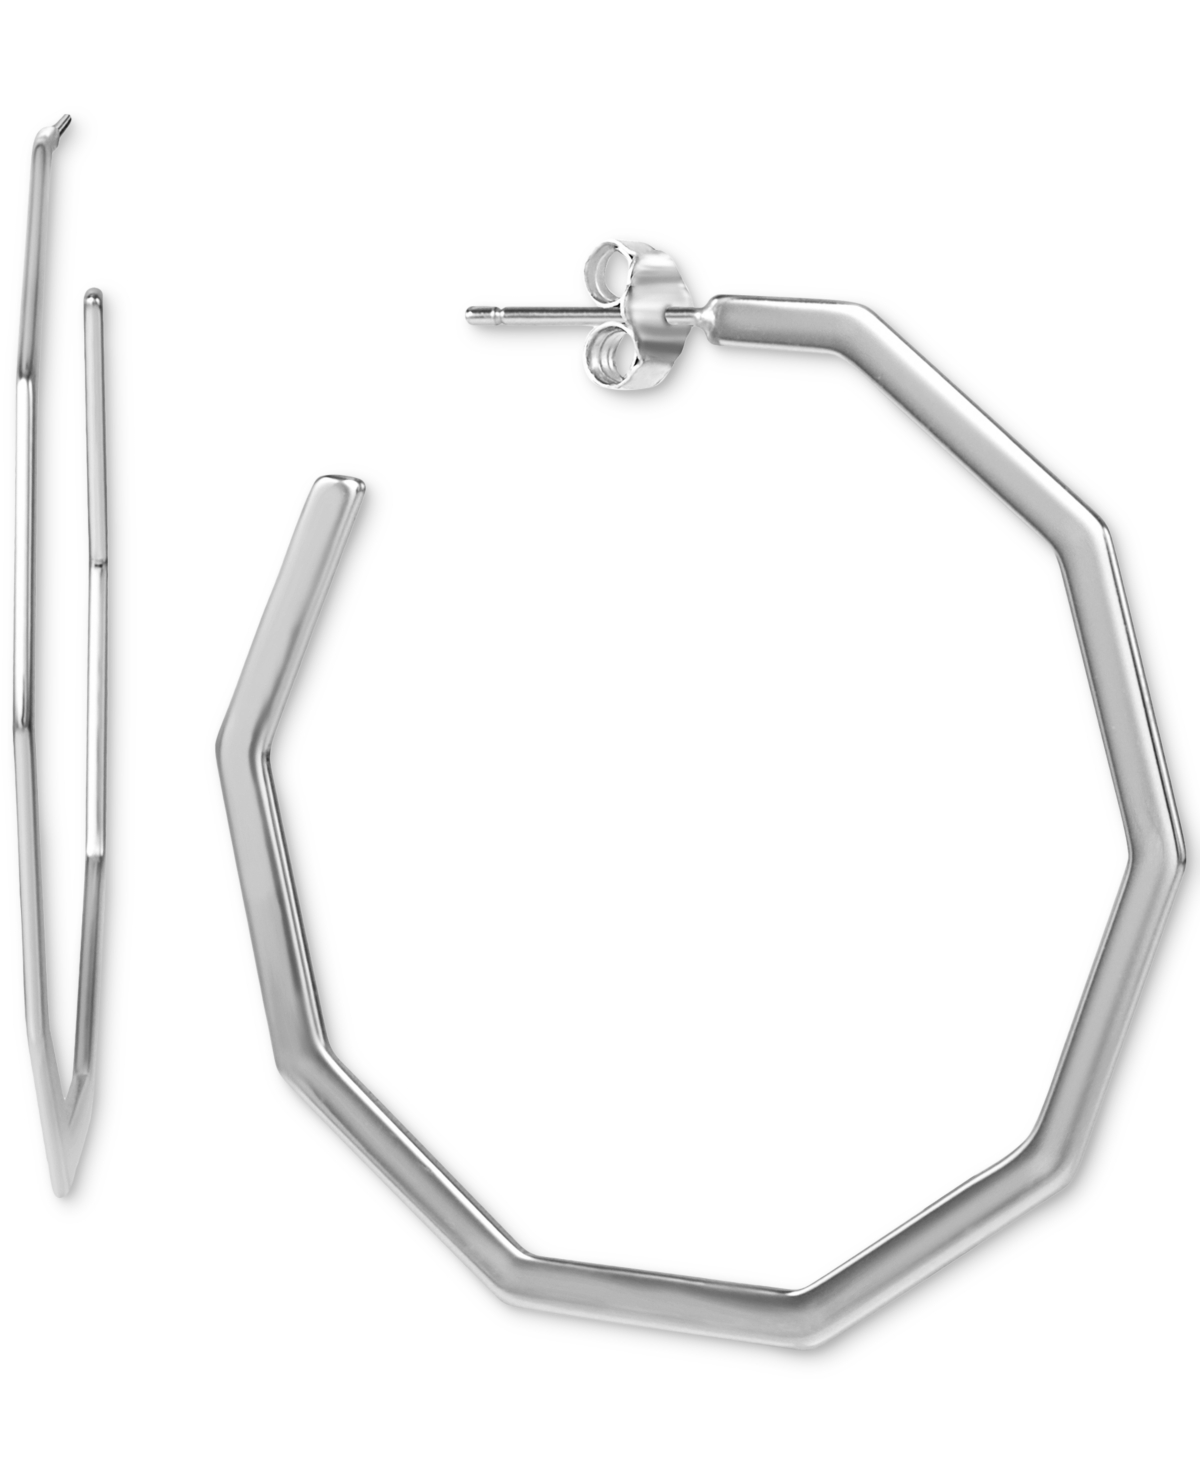 Polished Geometric Medium Hoop Earrings in Sterling Silver, 1-5/8", Created for Macy's - Silver